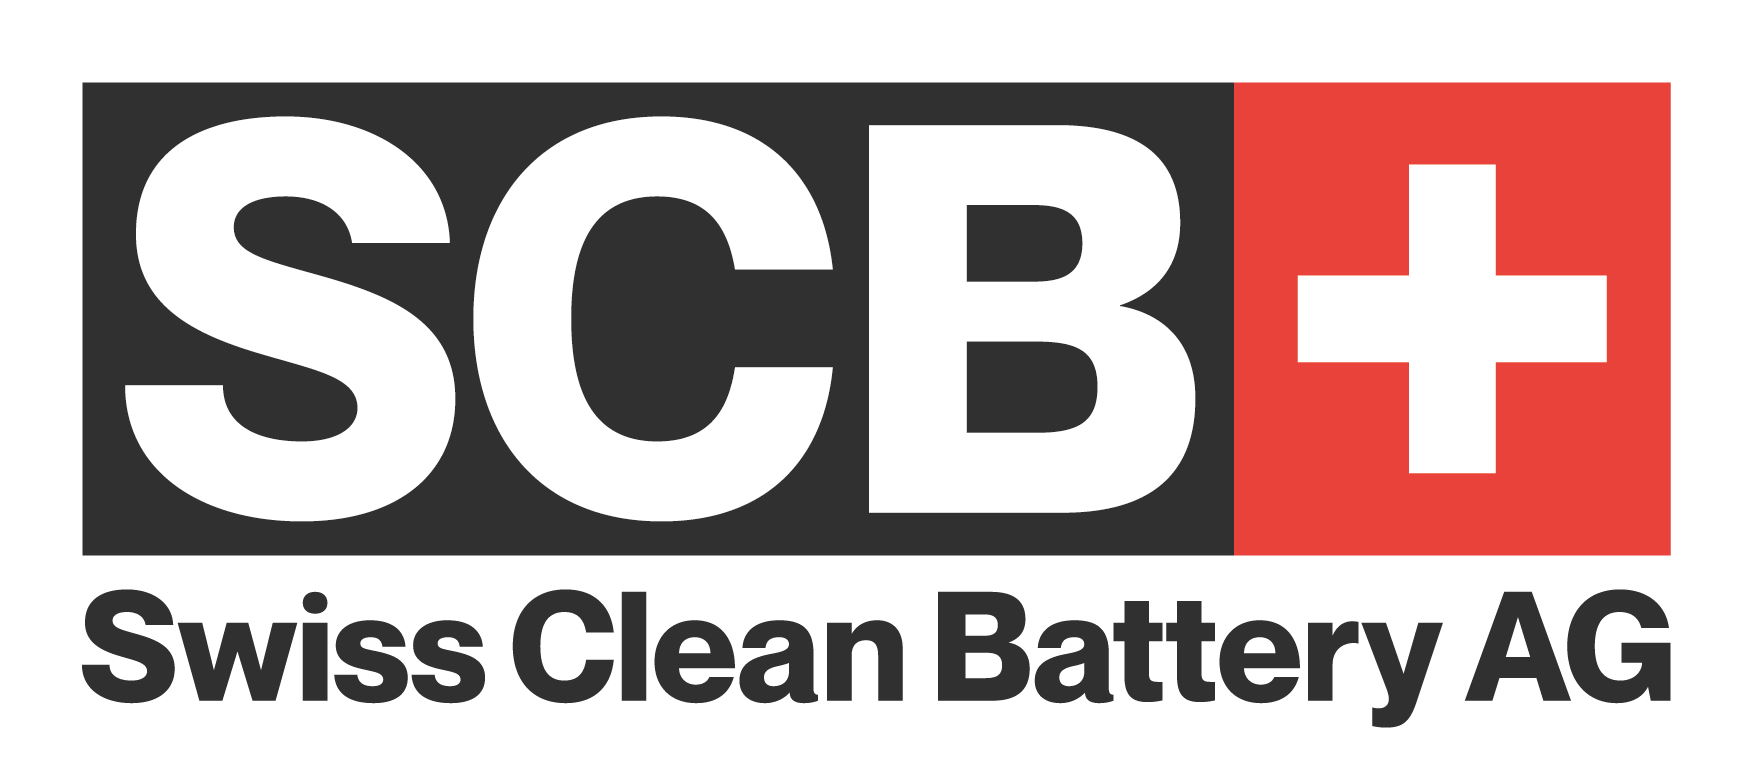 Swiss Clean Battery AG